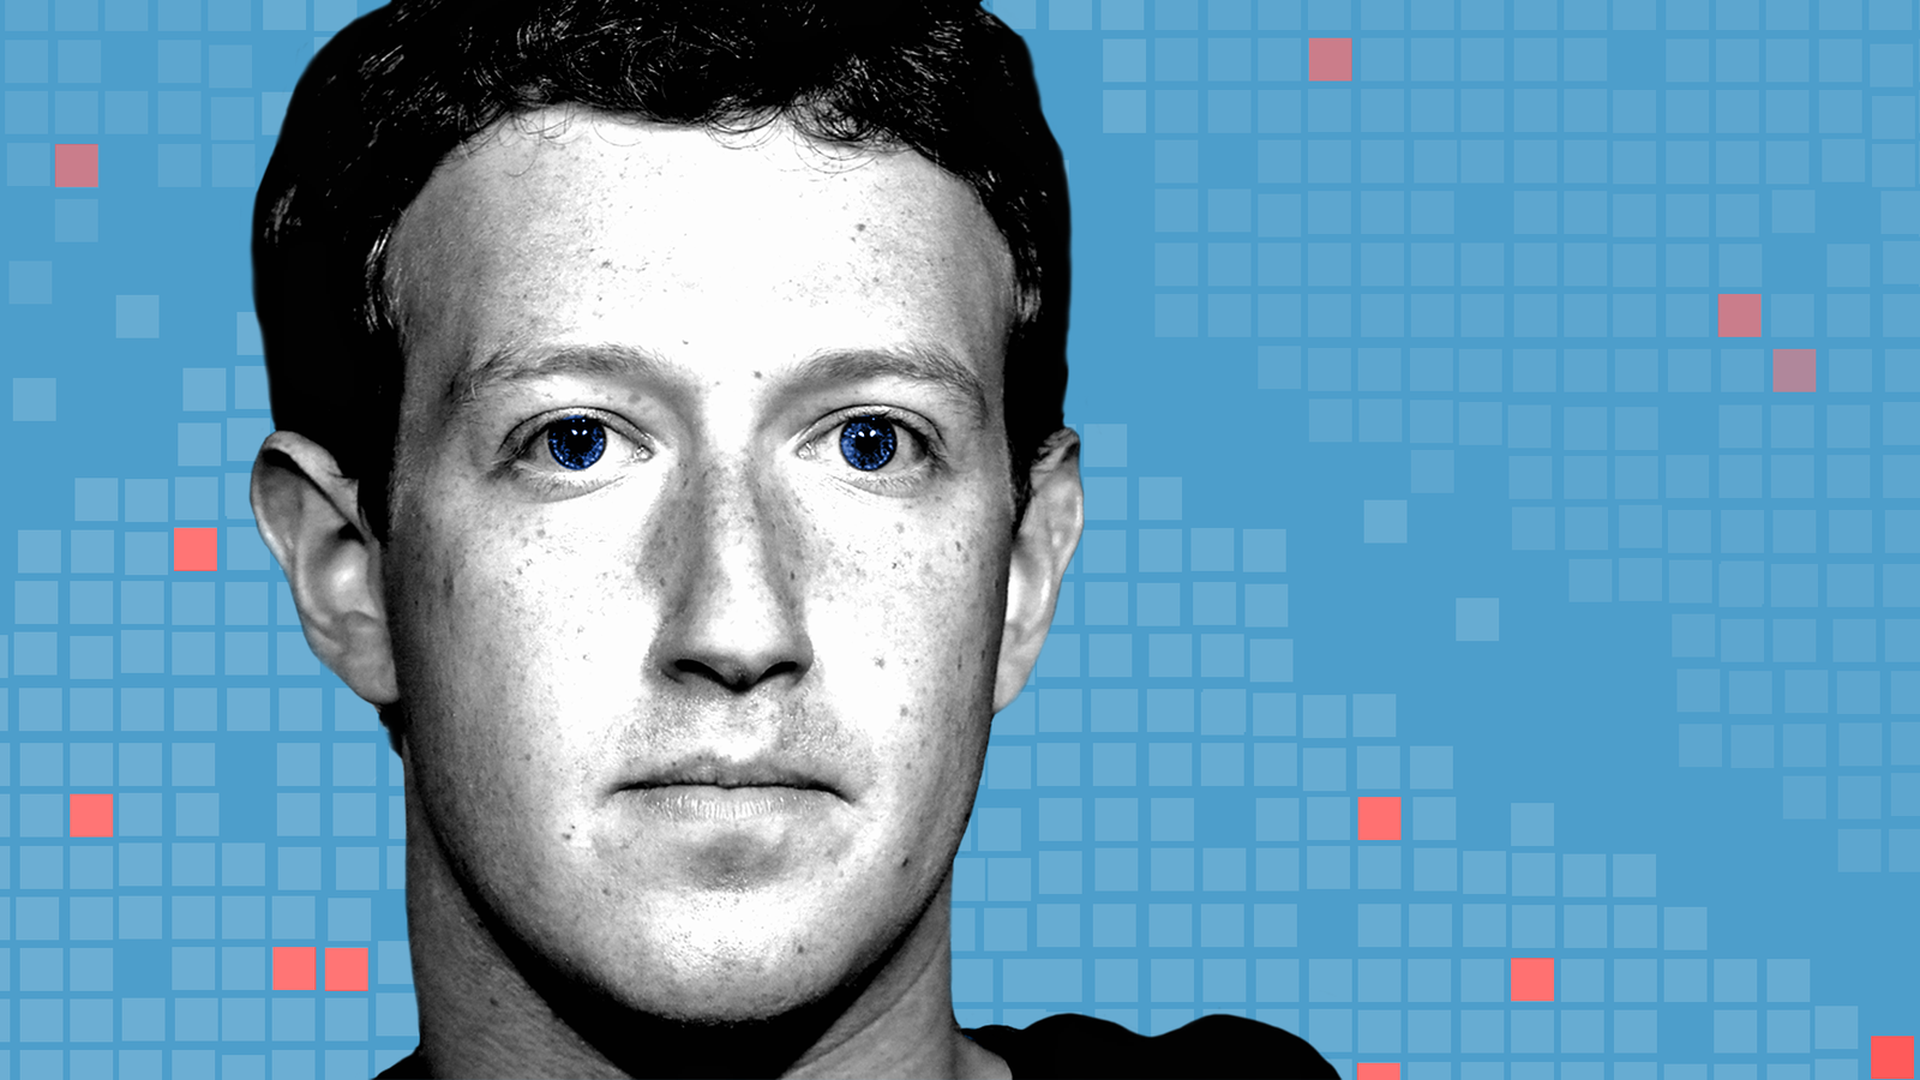 Illustration of Mark Zuckerberg's face set against a grid backdrop